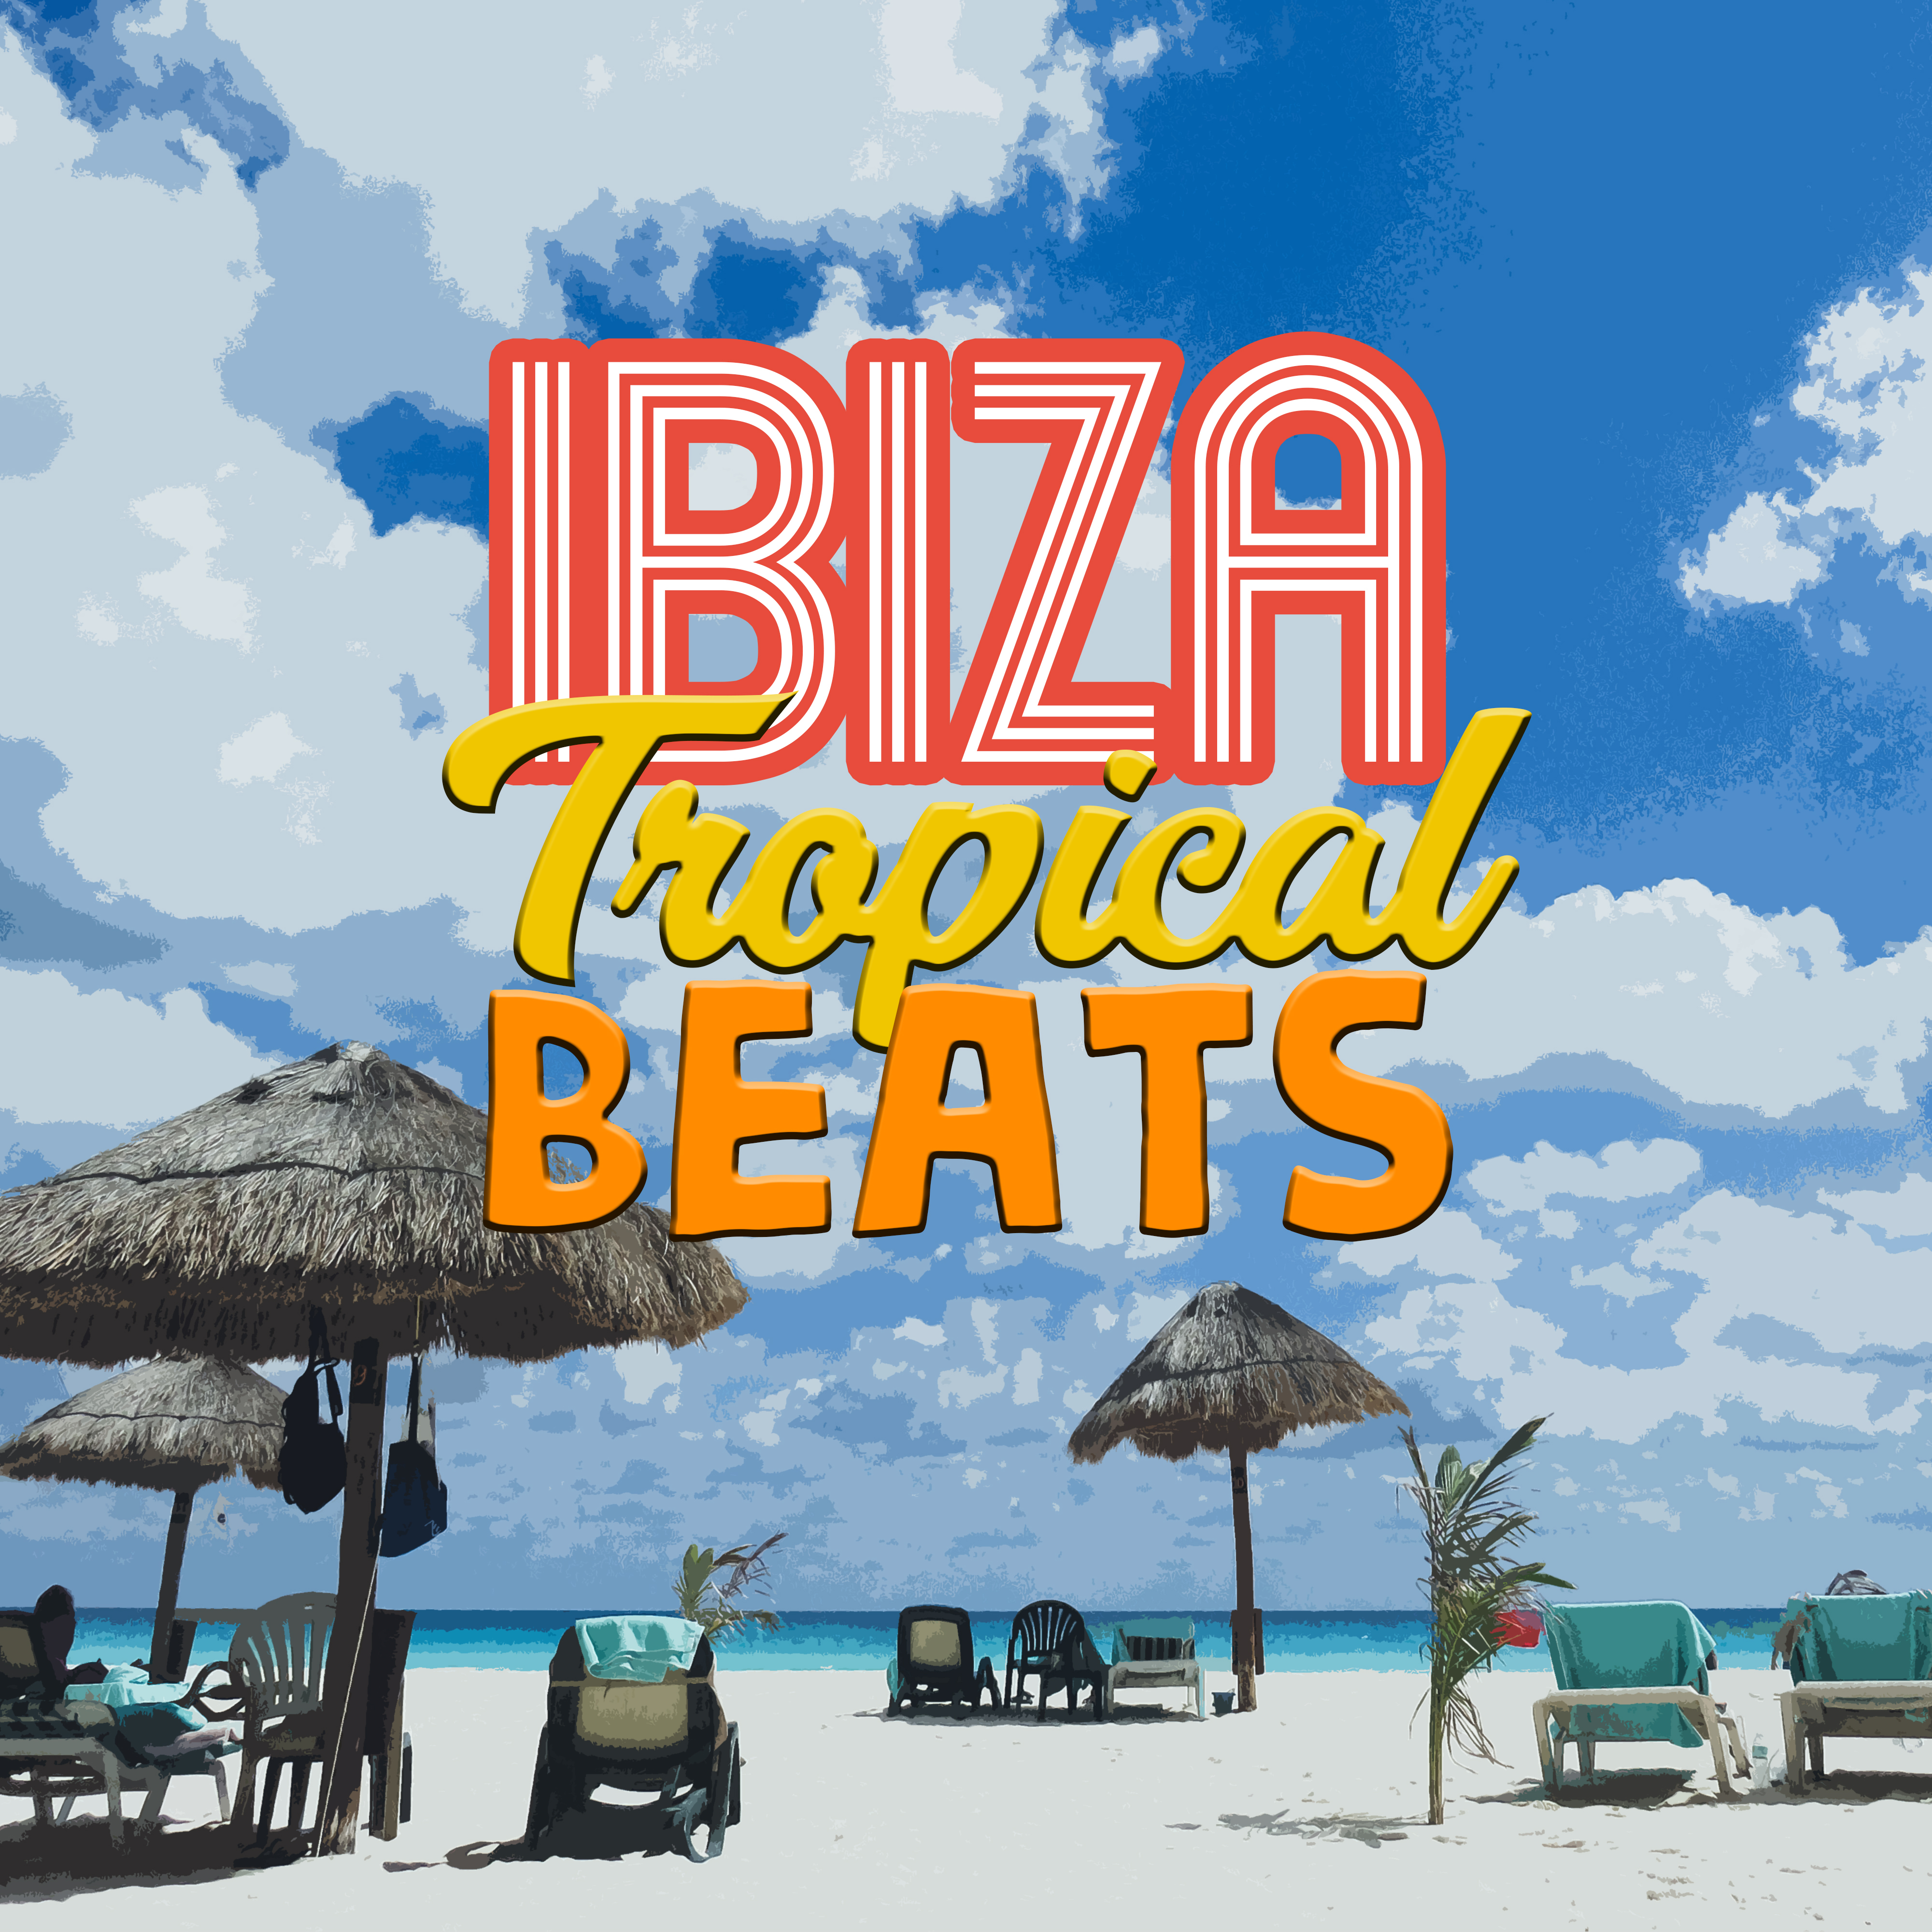 Ibiza Tropical Beats – Summer Chillout 2017, Ibiza Party, Dancefloor, Baleares Islands